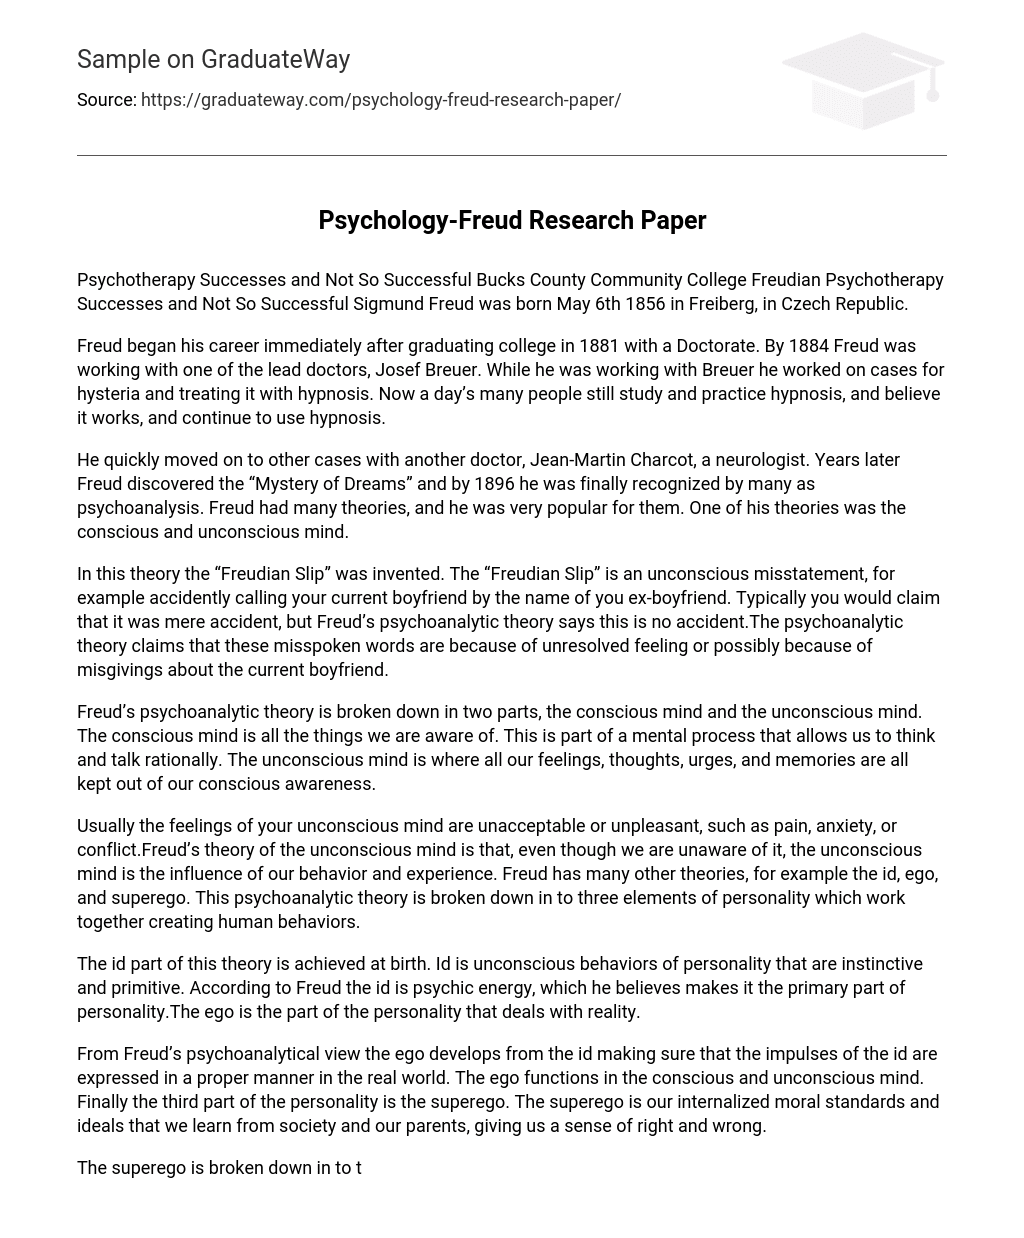 Psychology-Freud Research Paper